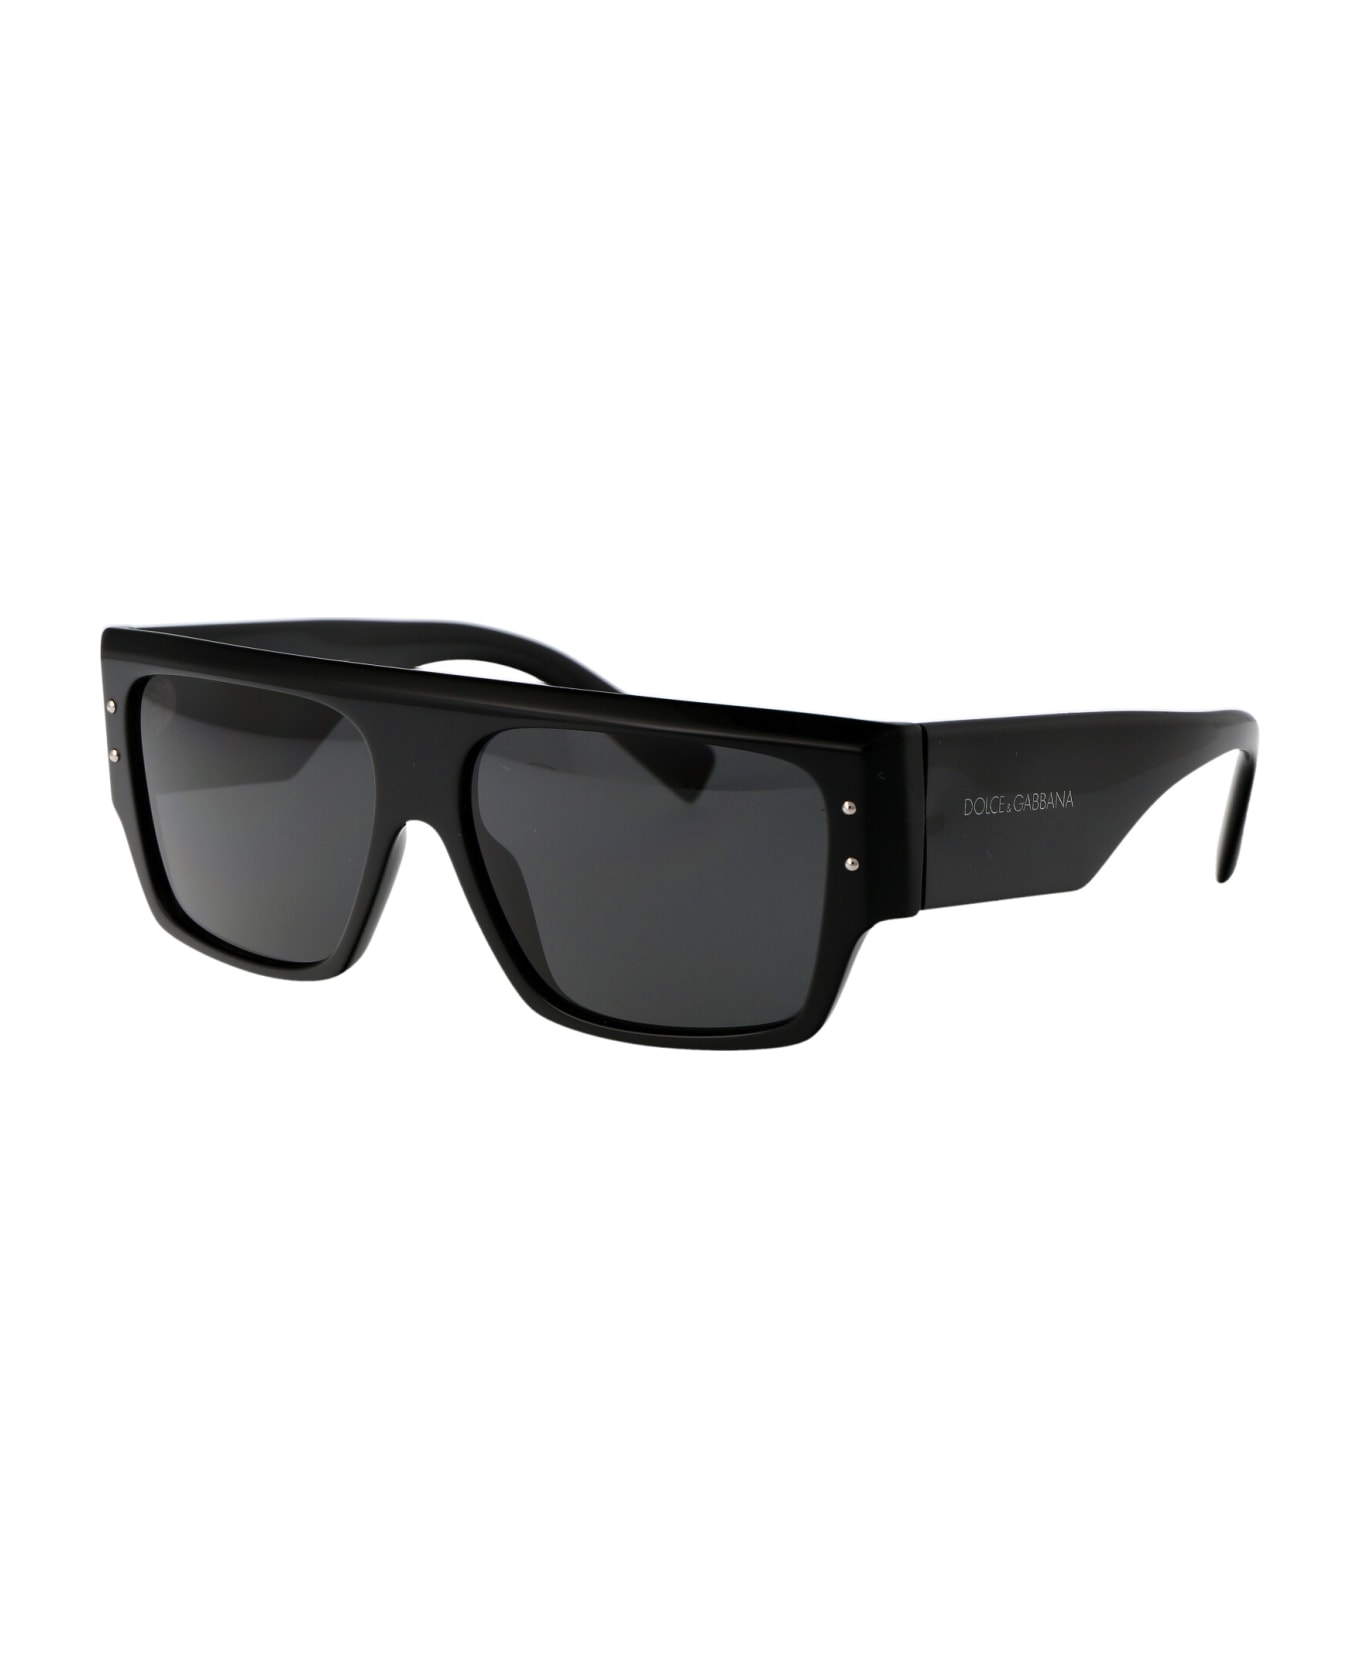 Dolce & Gabbana Eyewear 0dg4459 Sunglasses - 501/87 BLACK